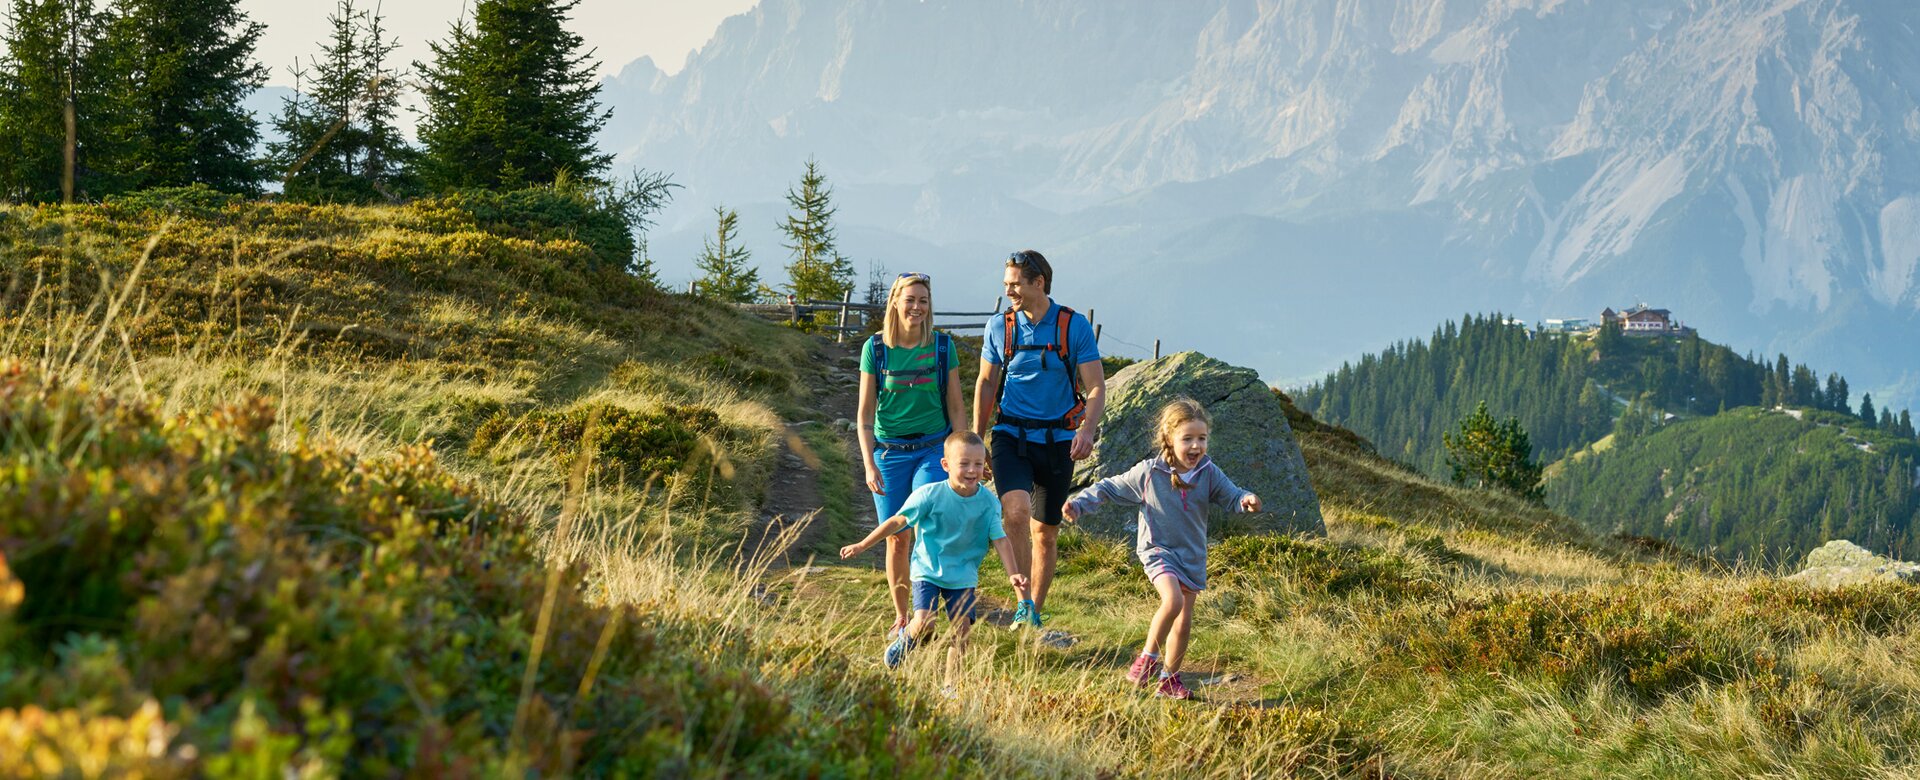 Summer hiking holidays with kids in Schladming-Dachstein in Ski amadé | © Schladming-Dachstein Tourismus, Peter Burgstaller